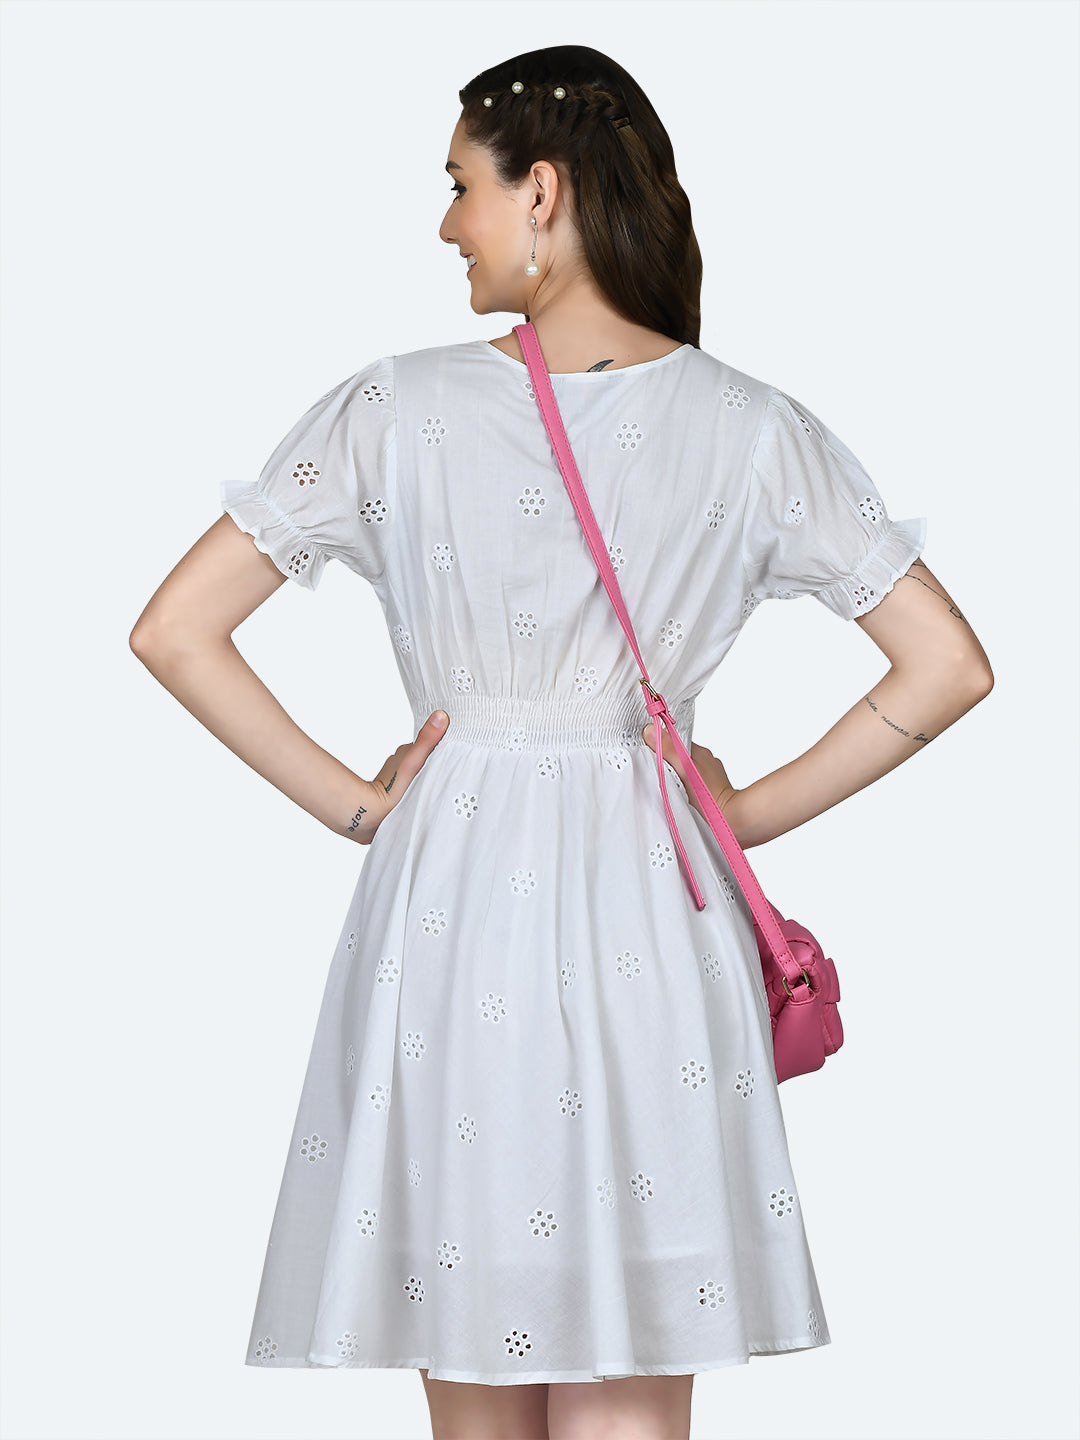 White Embroidered Short Dress For Women